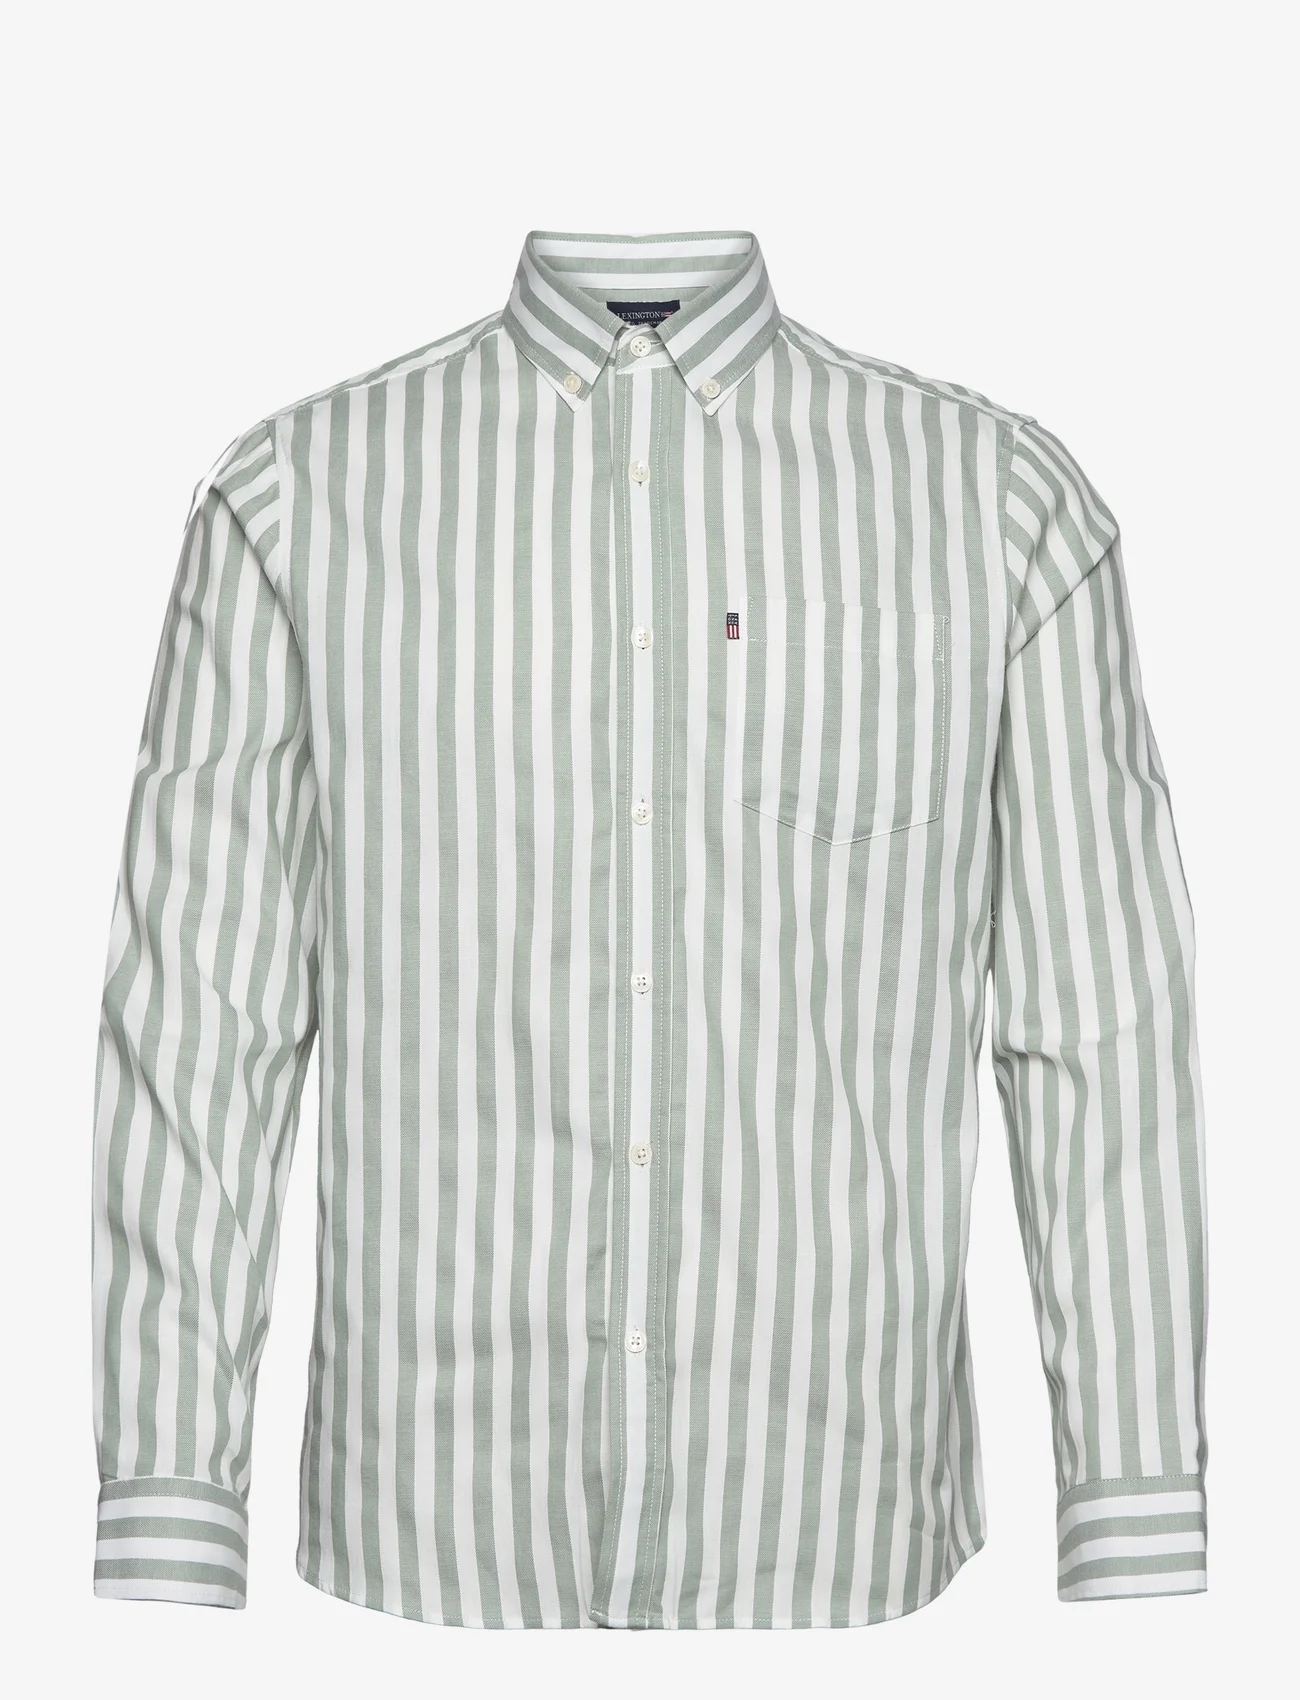 Lexington Clothing - Fred Striped Shirt - casual hemden - green/white stripe - 0